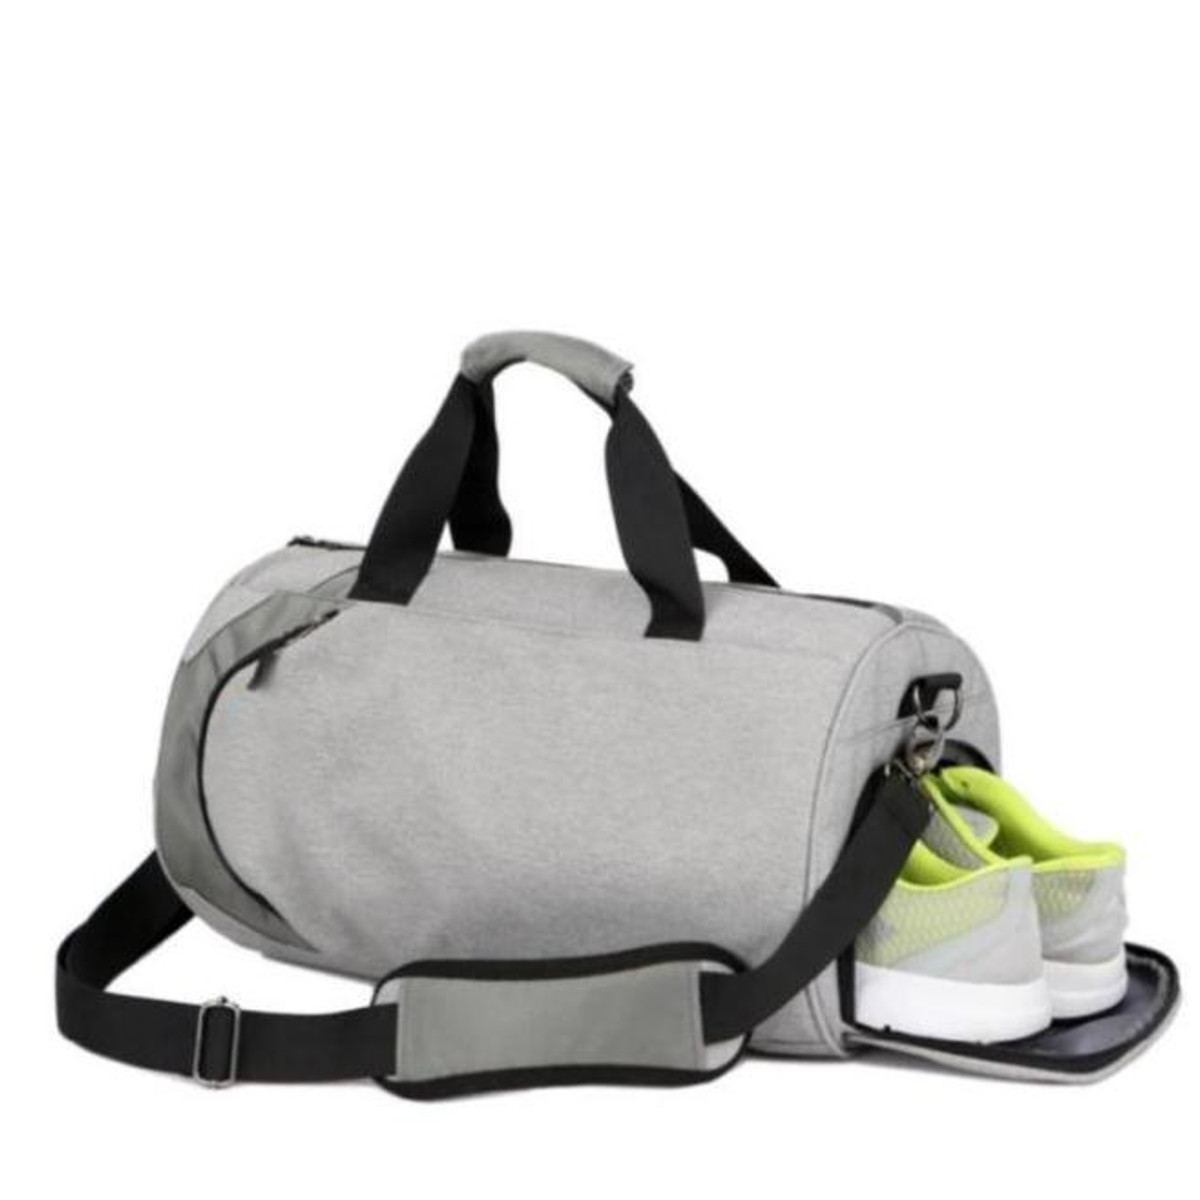 Waterproof-Multifunctional-Yoga-Bag-Outdoor-Sport-Travel-Fitness-Gym-Trainning-Handbag-Luggage-1518296-5